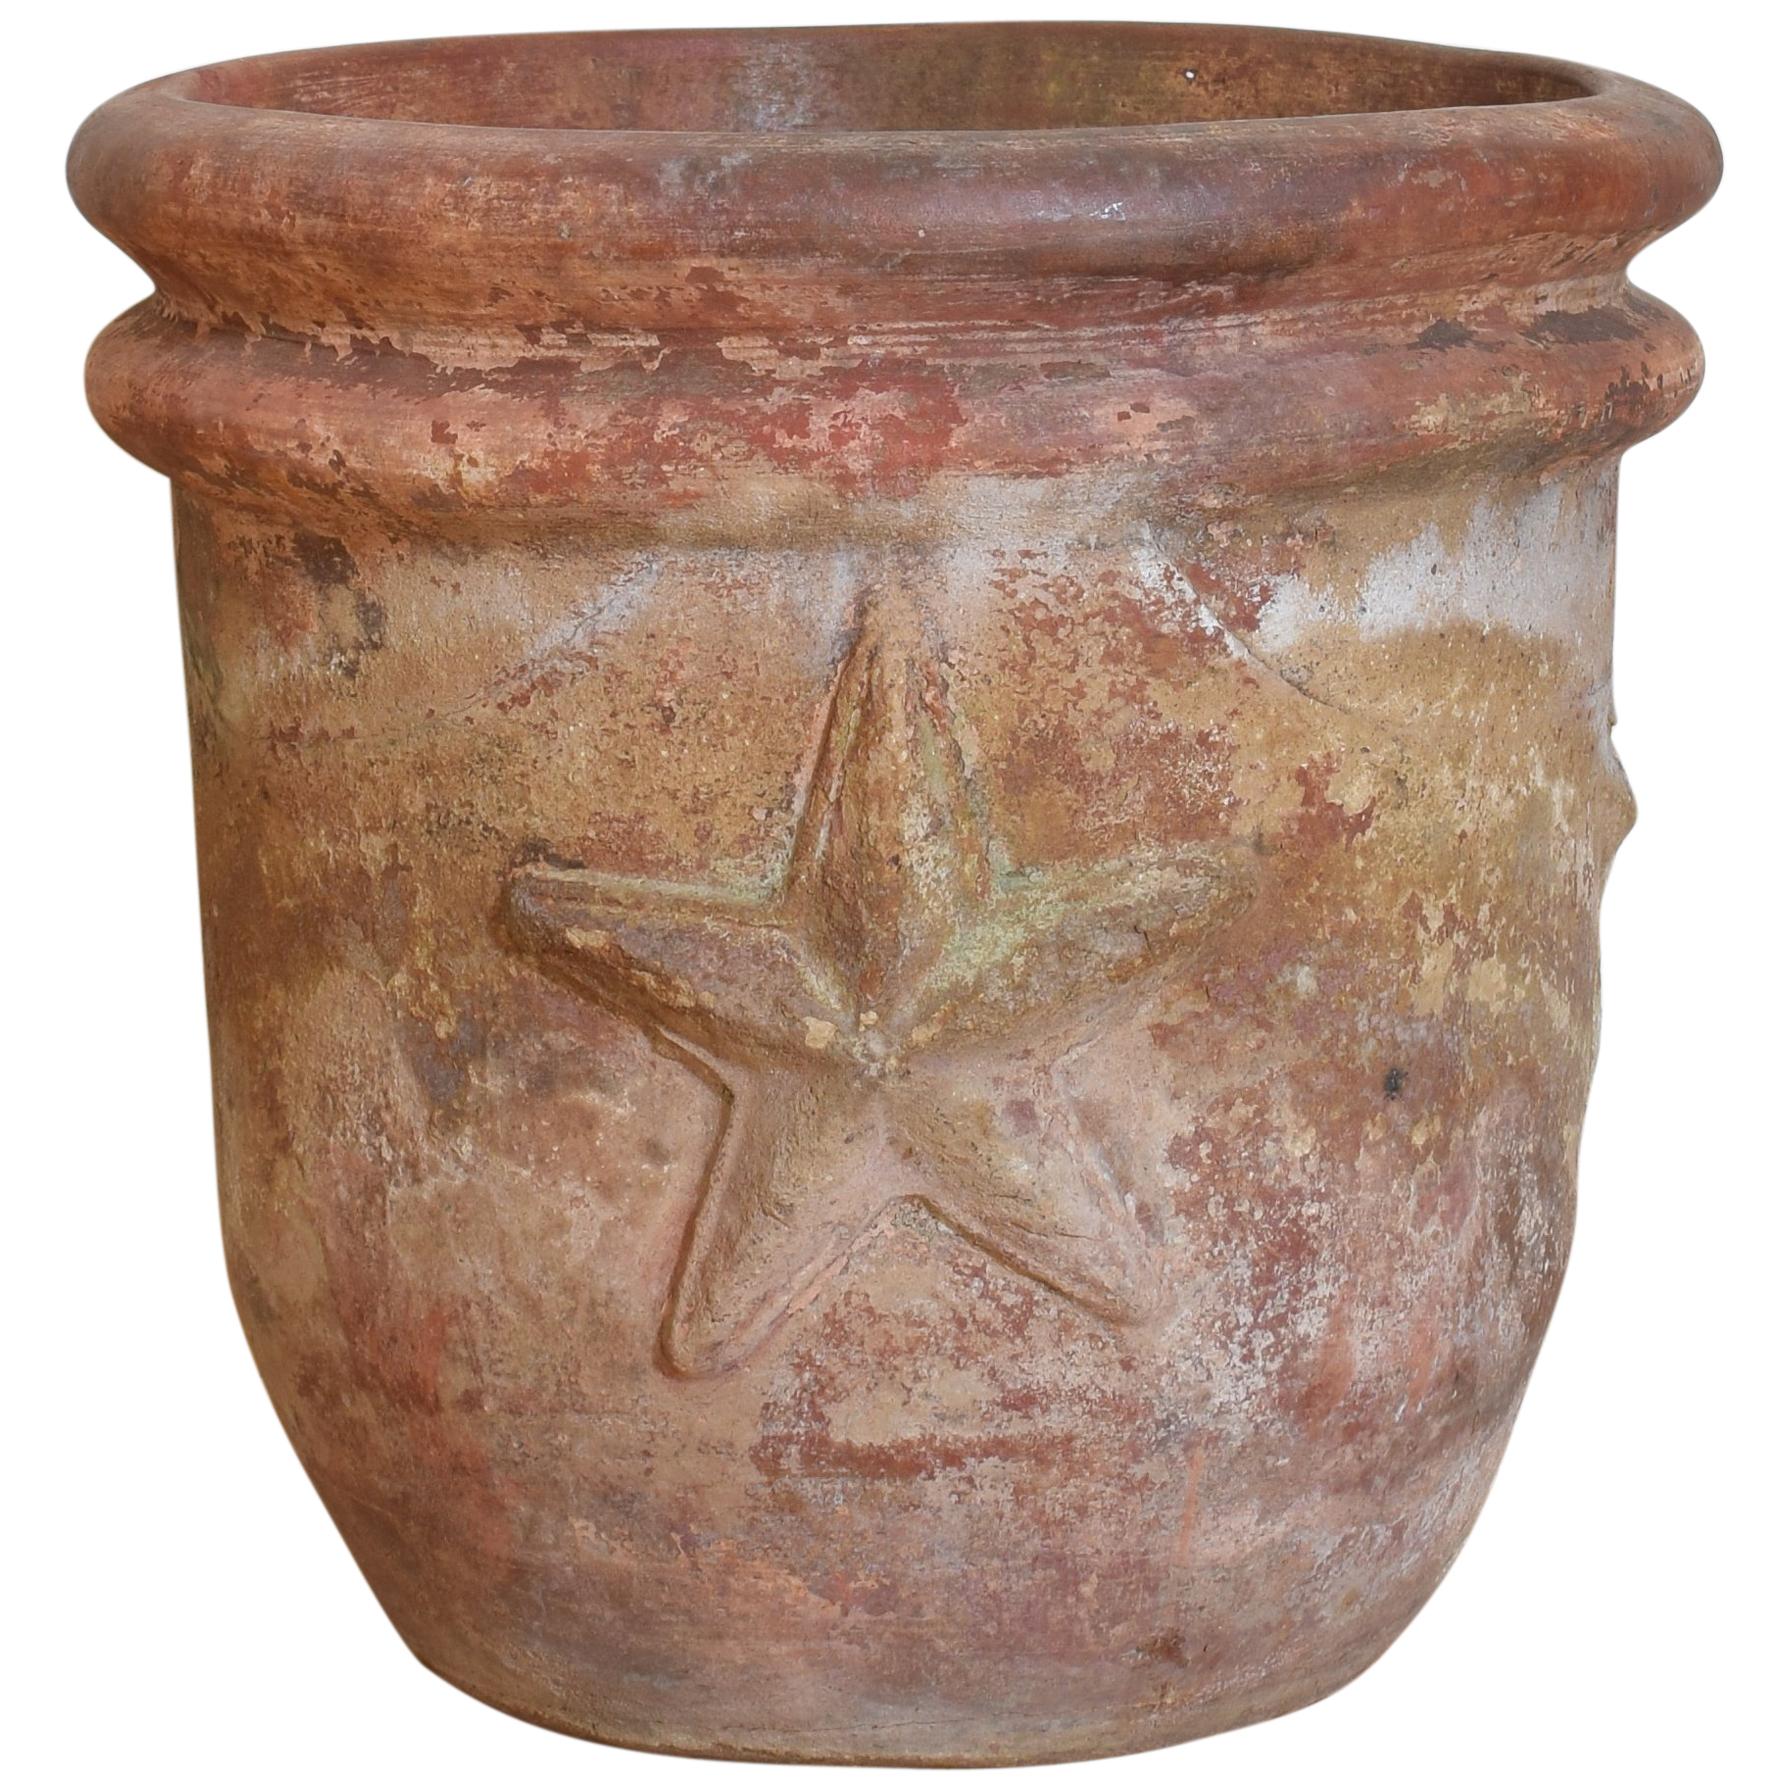 Terracotta Planter, Texas Star, 20th Century